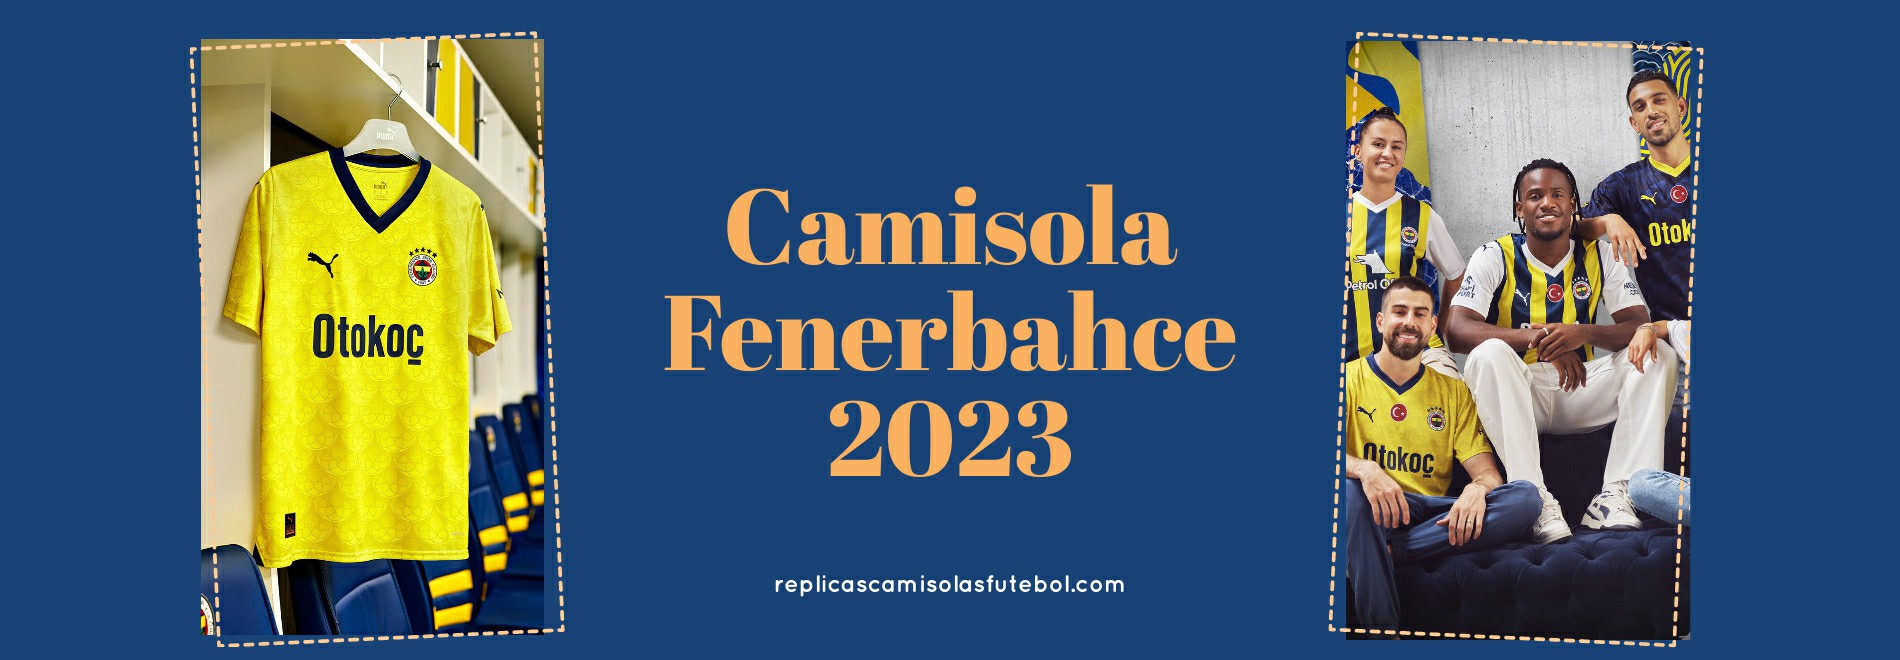 Camisola Fenerbahce 2023-2024